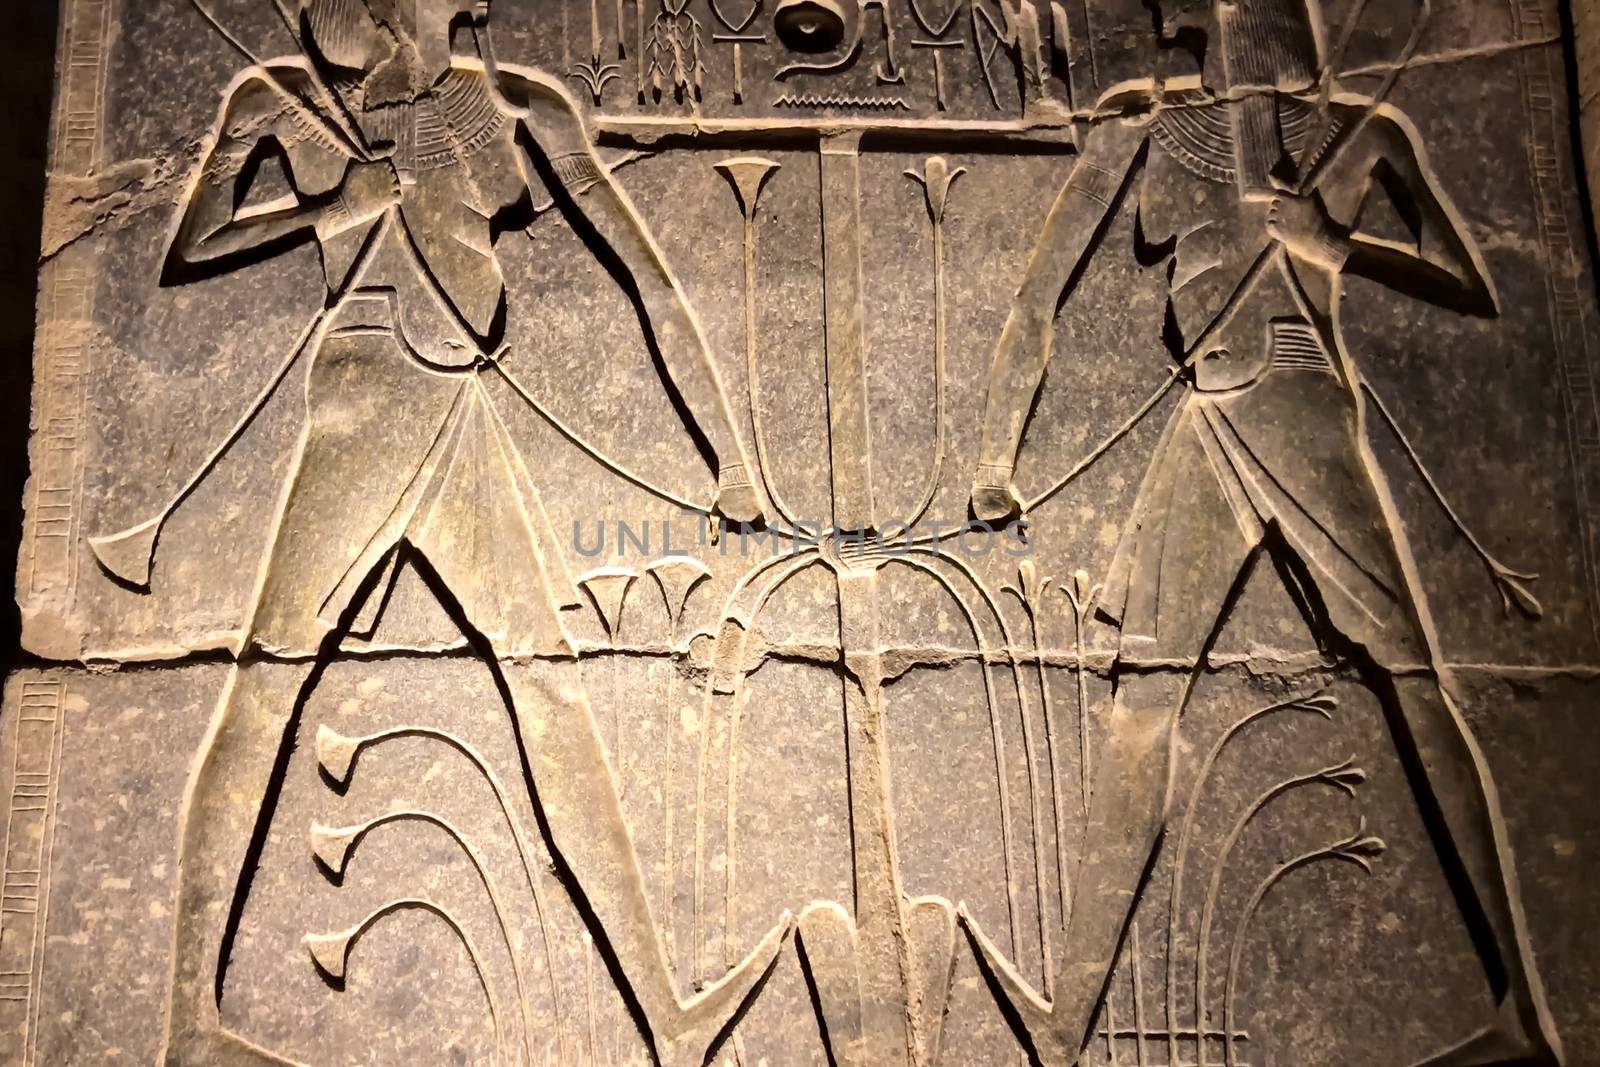 Egyptian hieroglyphs and drawings on the walls and columns. Egyptian language, The life of ancient gods and people in hieroglyphics and drawings. by nyrok